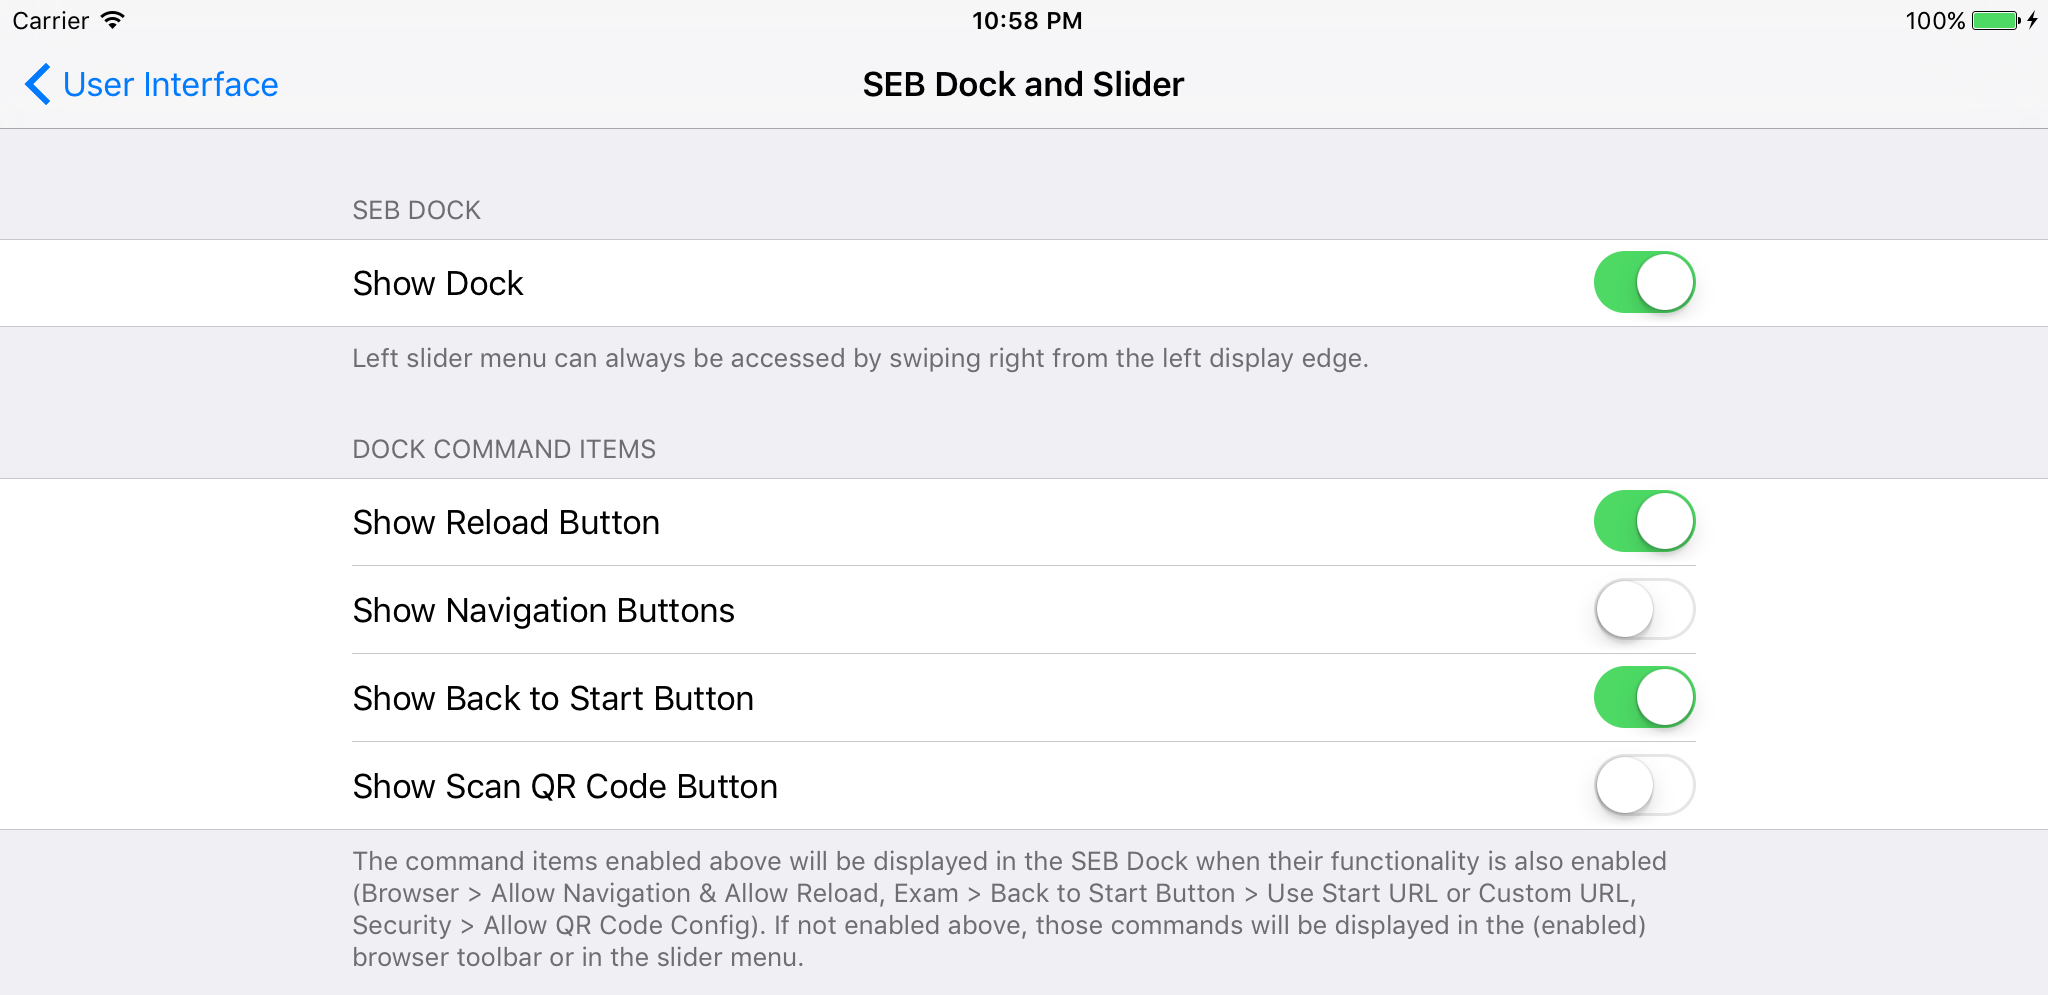 SEB Settings for SEB Dock and Slider